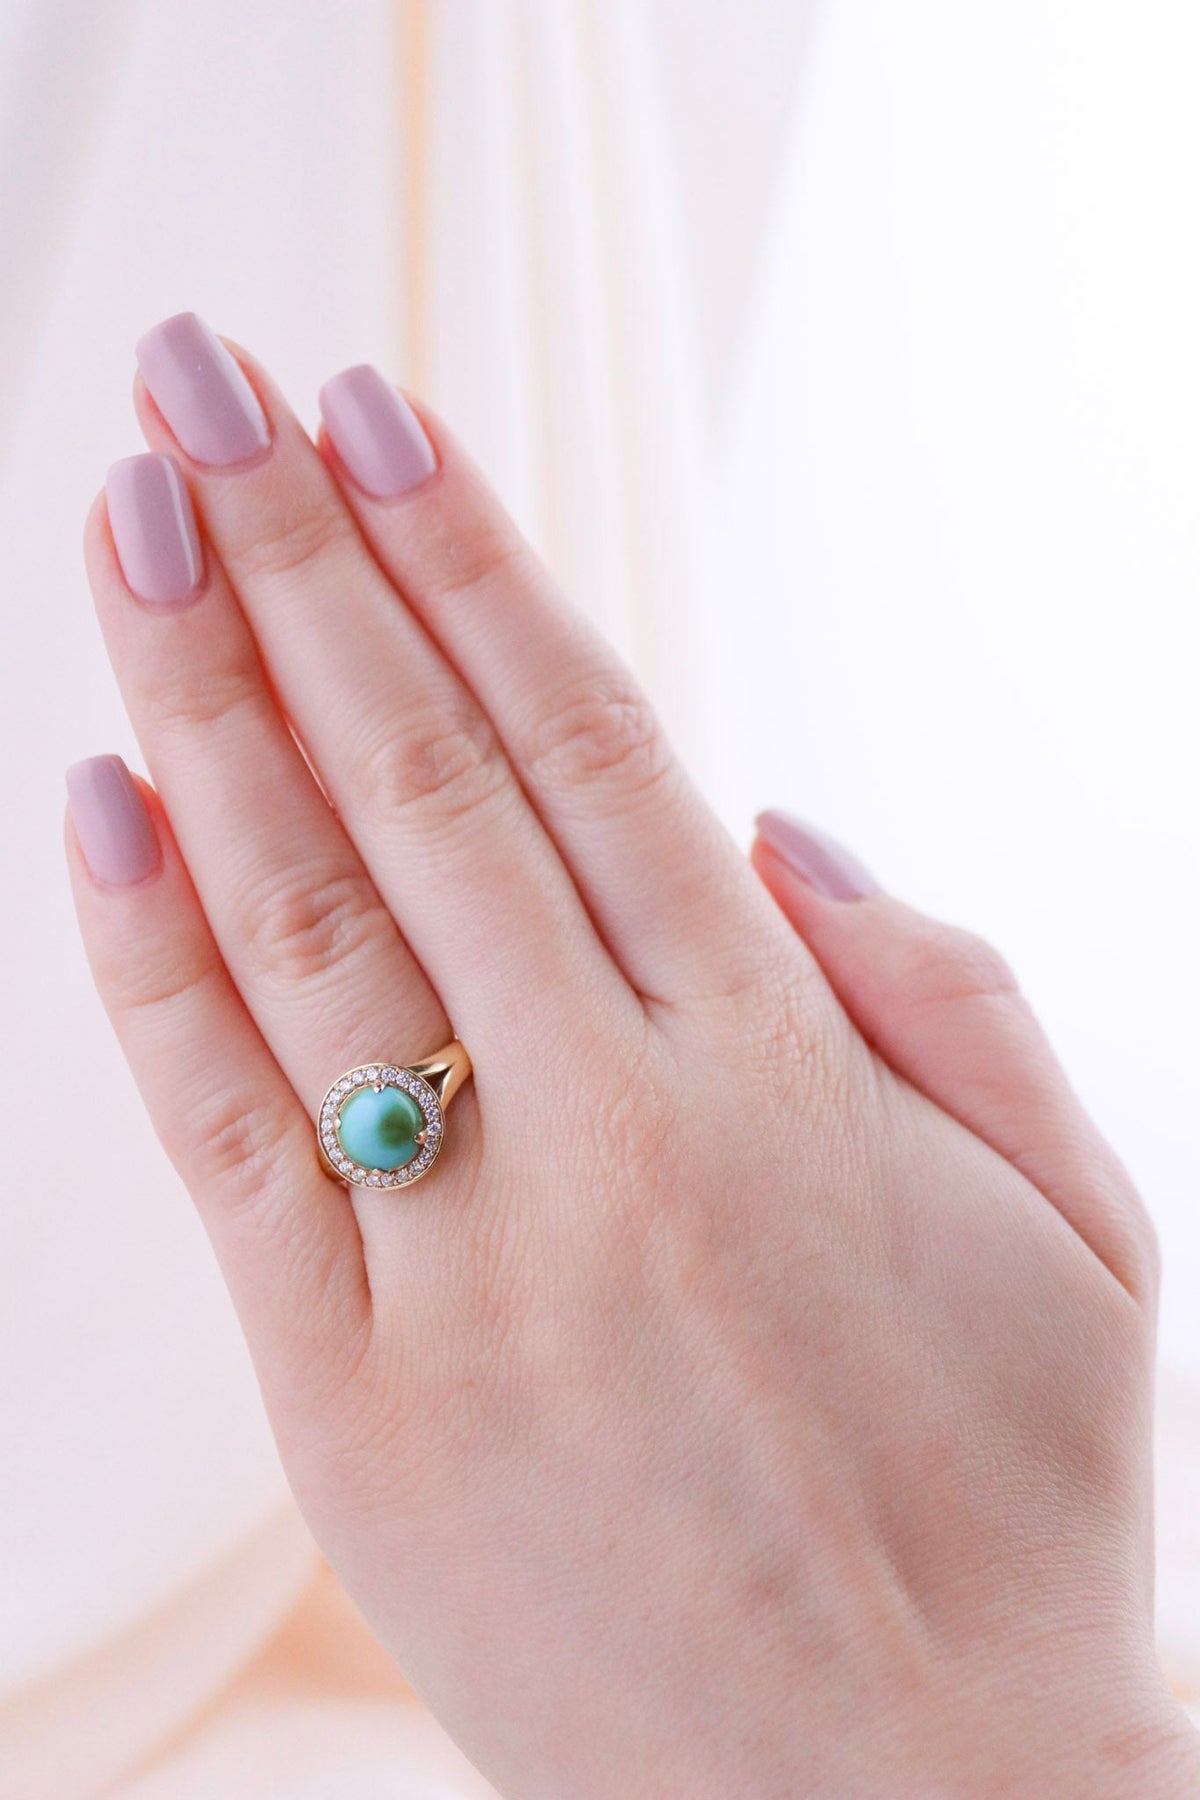 Luna Blue Turquoise Ring - Kingdom Jewelry